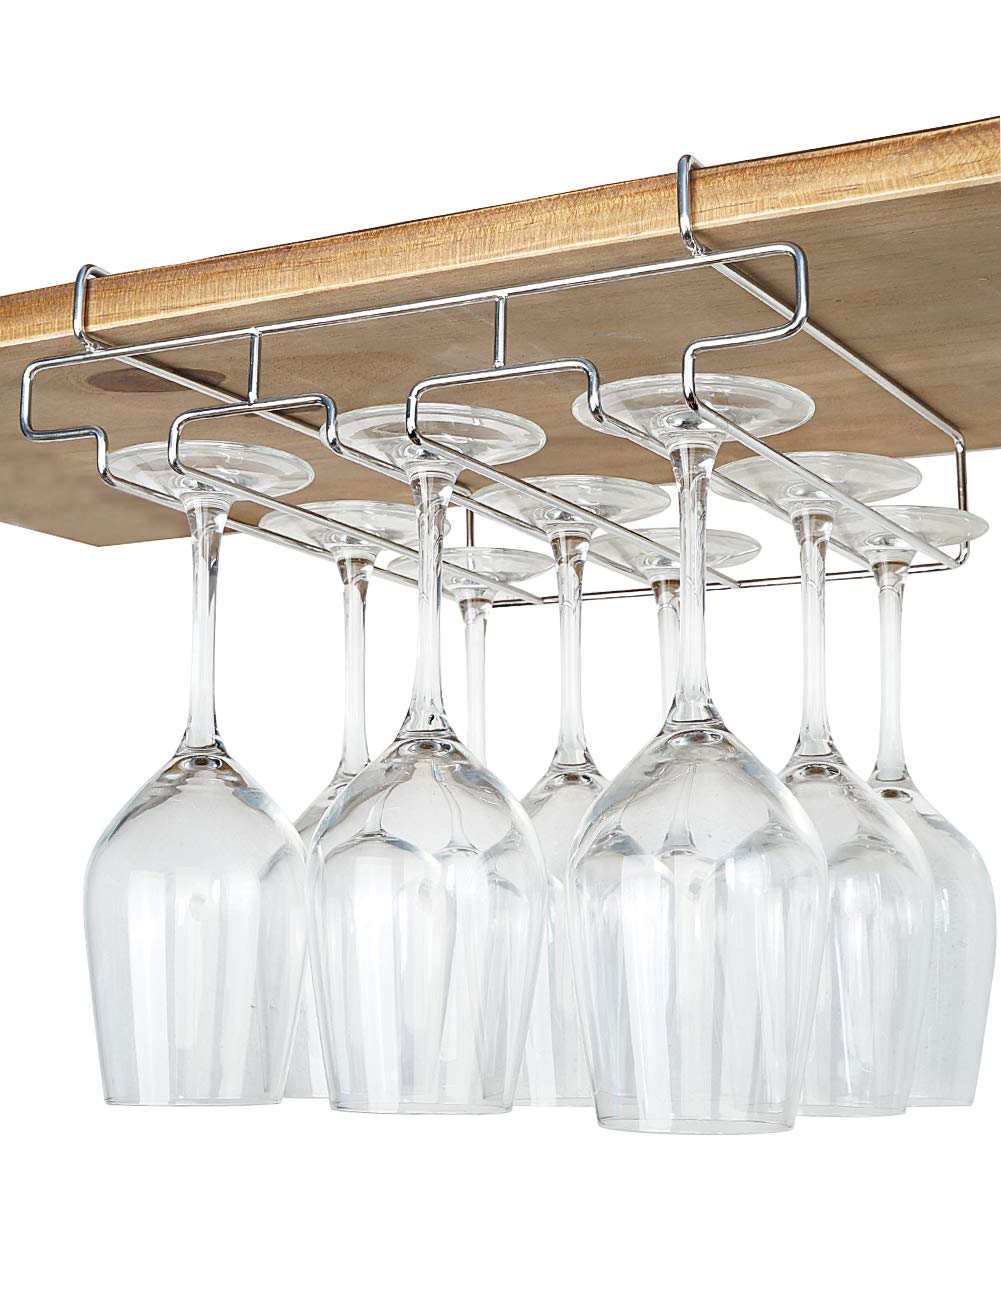 Bafvt Wine Glass Holder - 3 Rows Stemware Rack Under Cabinet - 304 Stainless Steel Hanger Storage Shelf, Fit for The Cabinet 0.8“ or Less